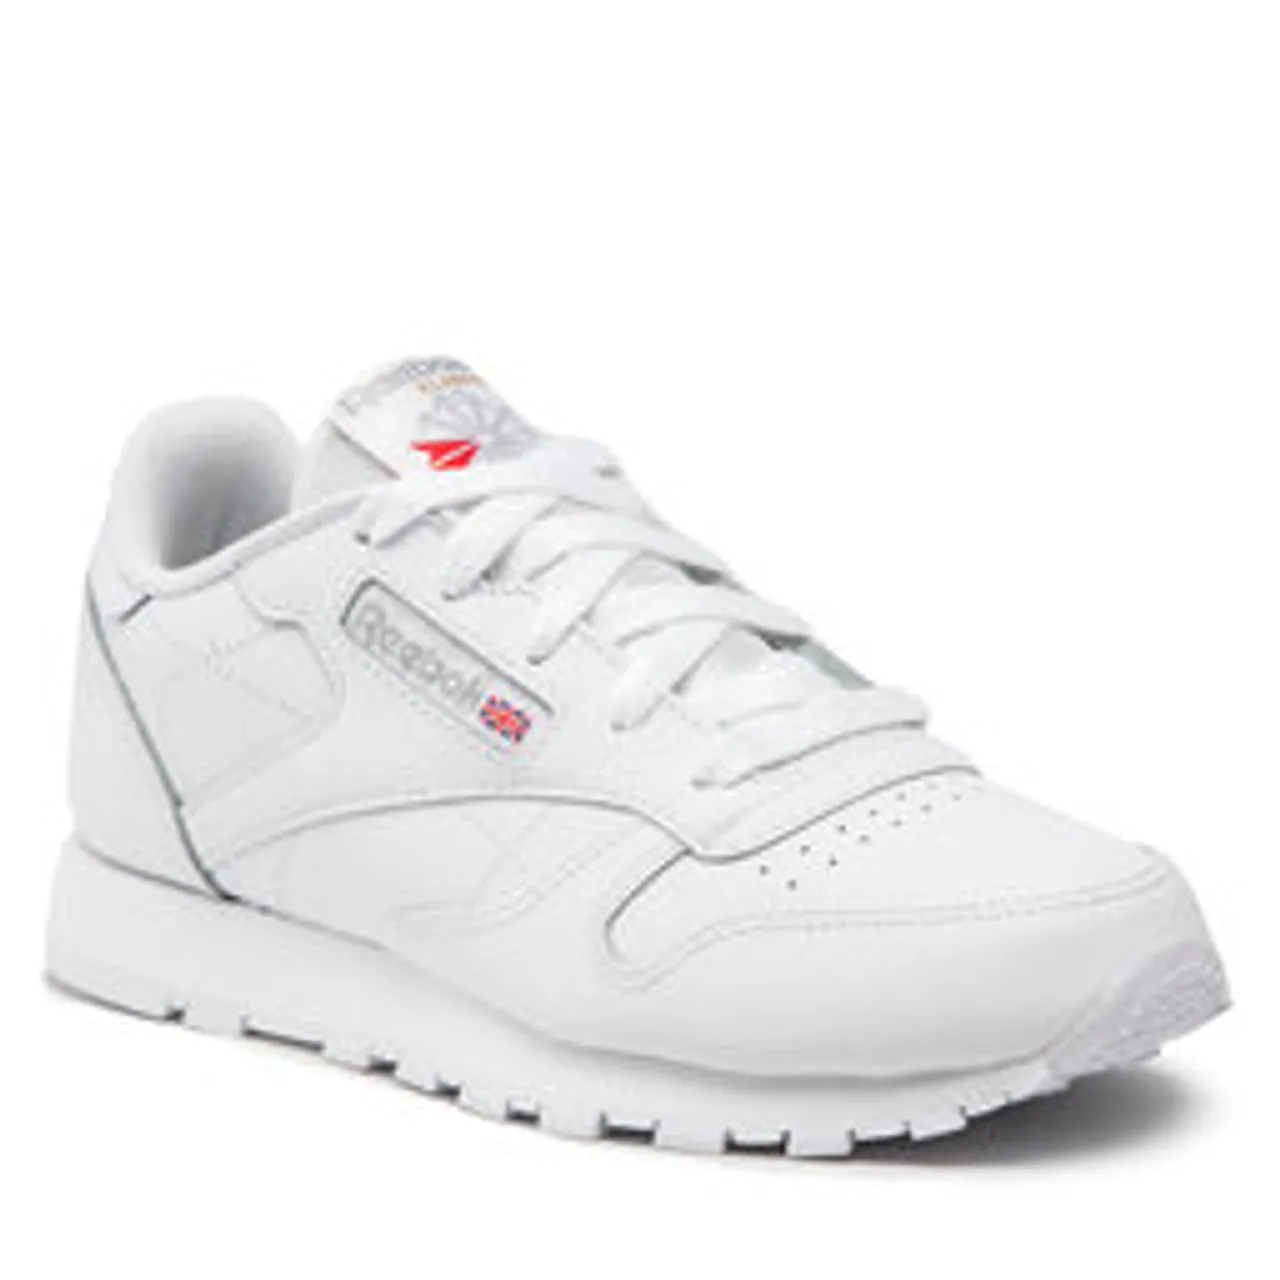 Schuhe Reebok Classic Leather 50172 White